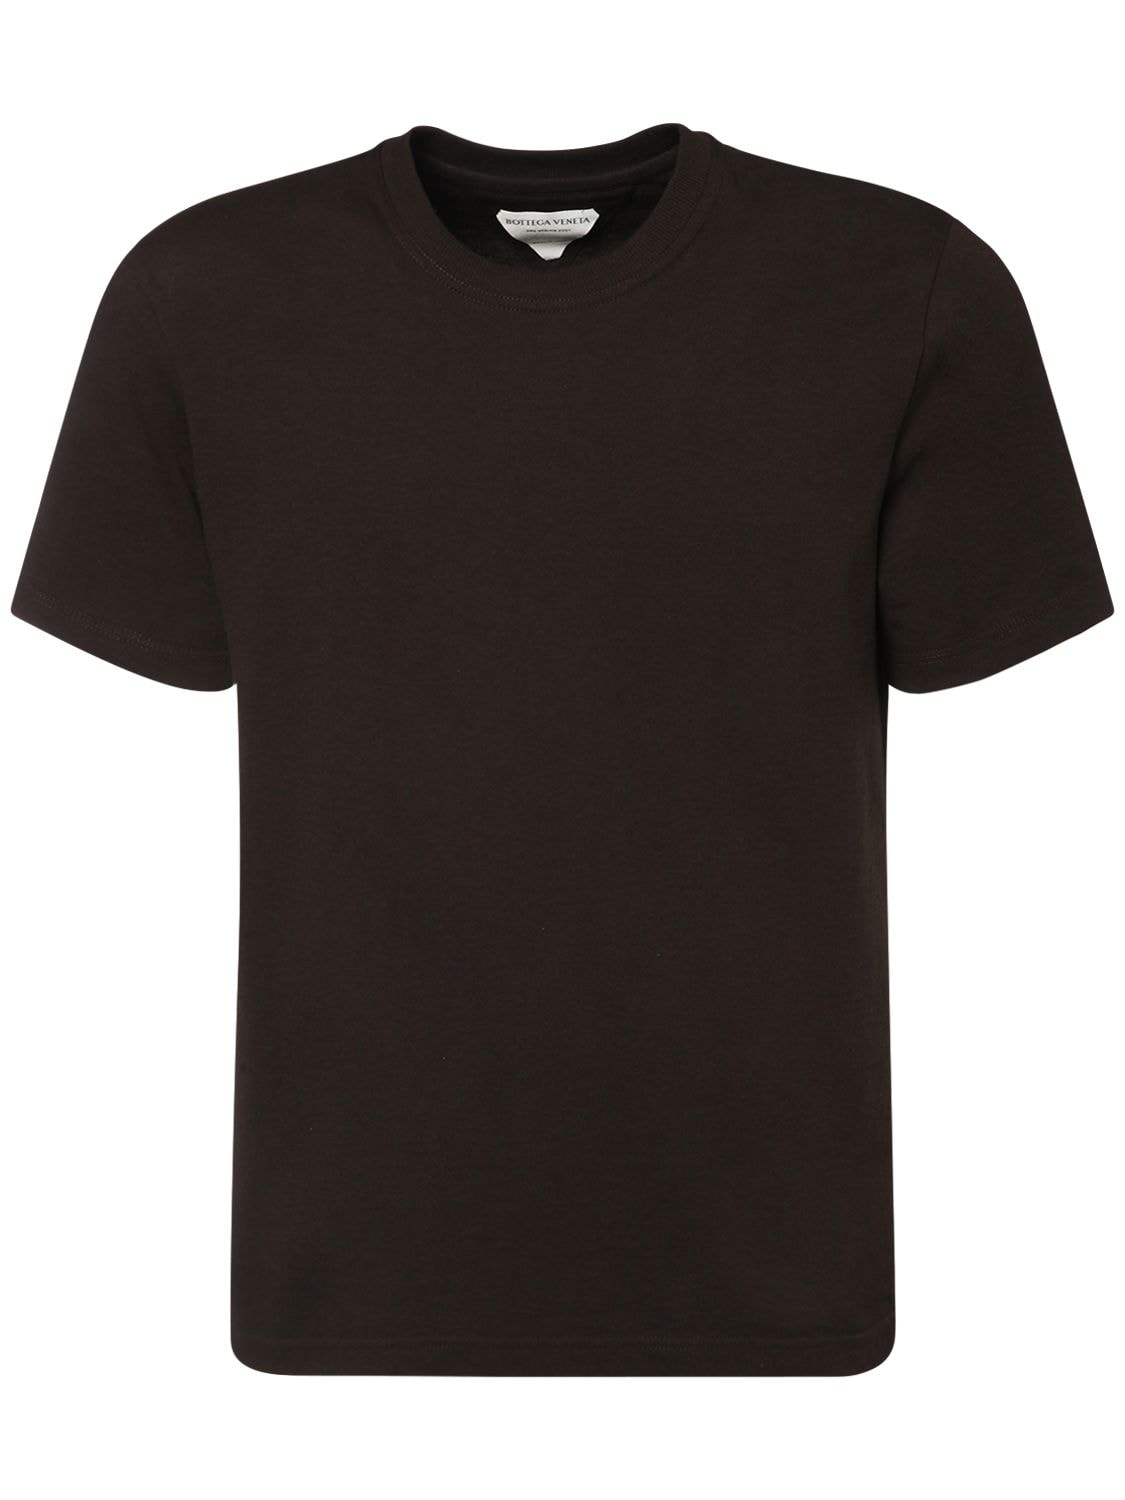 Bottega Veneta Light Cotton Jersey T-shirt In Fondente